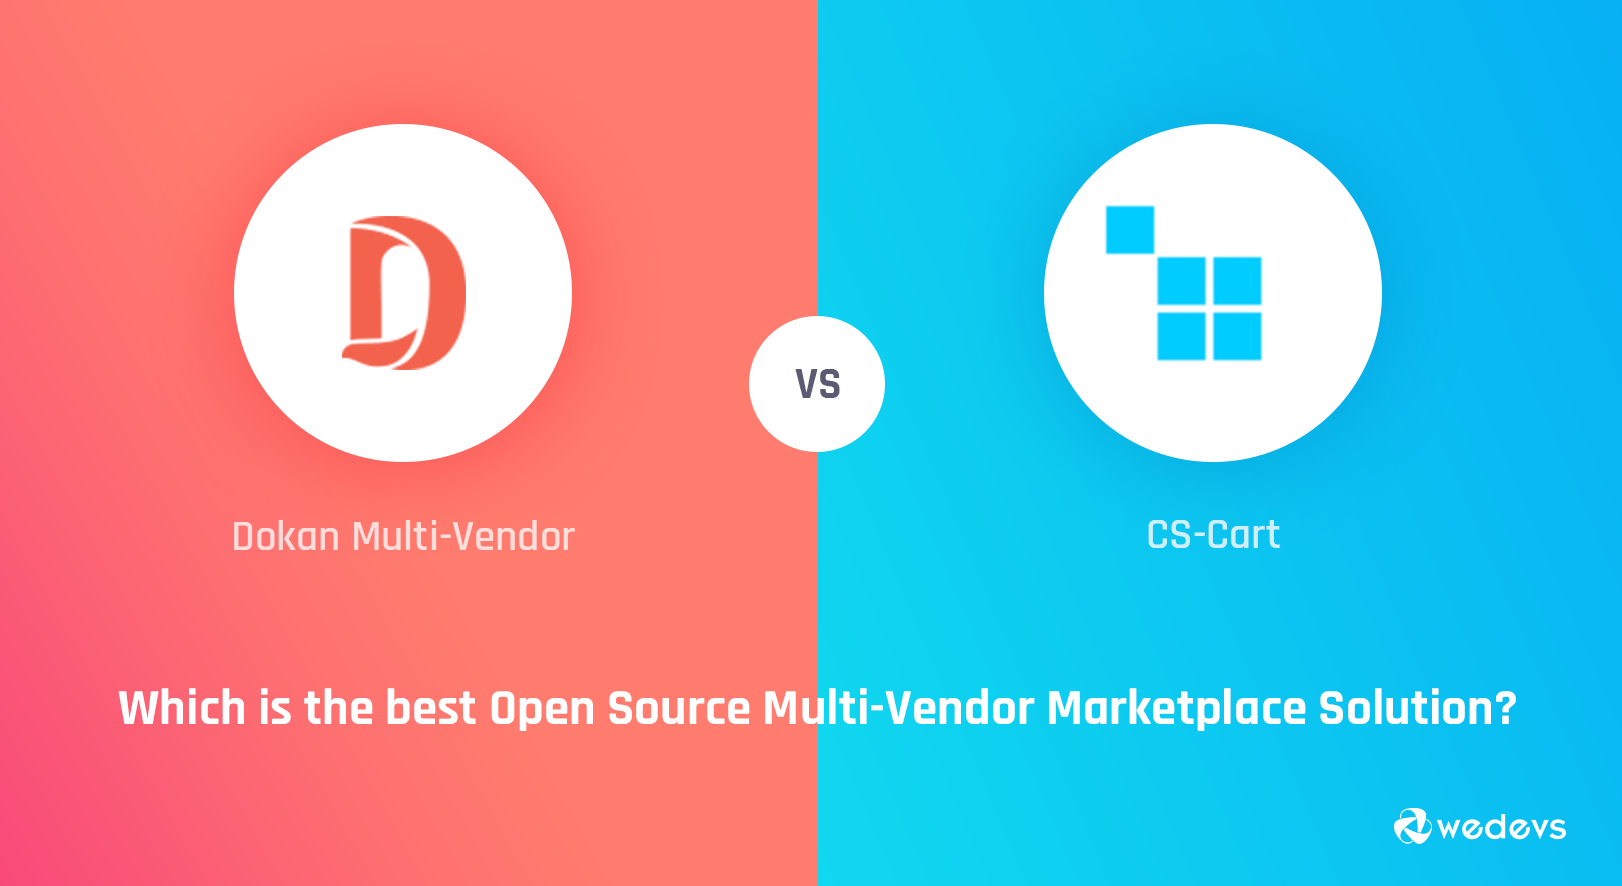 Dokan Multi Vendor vs CS-Cart: Which is the best Open Source Multi-Vendor Marketplace Solution?